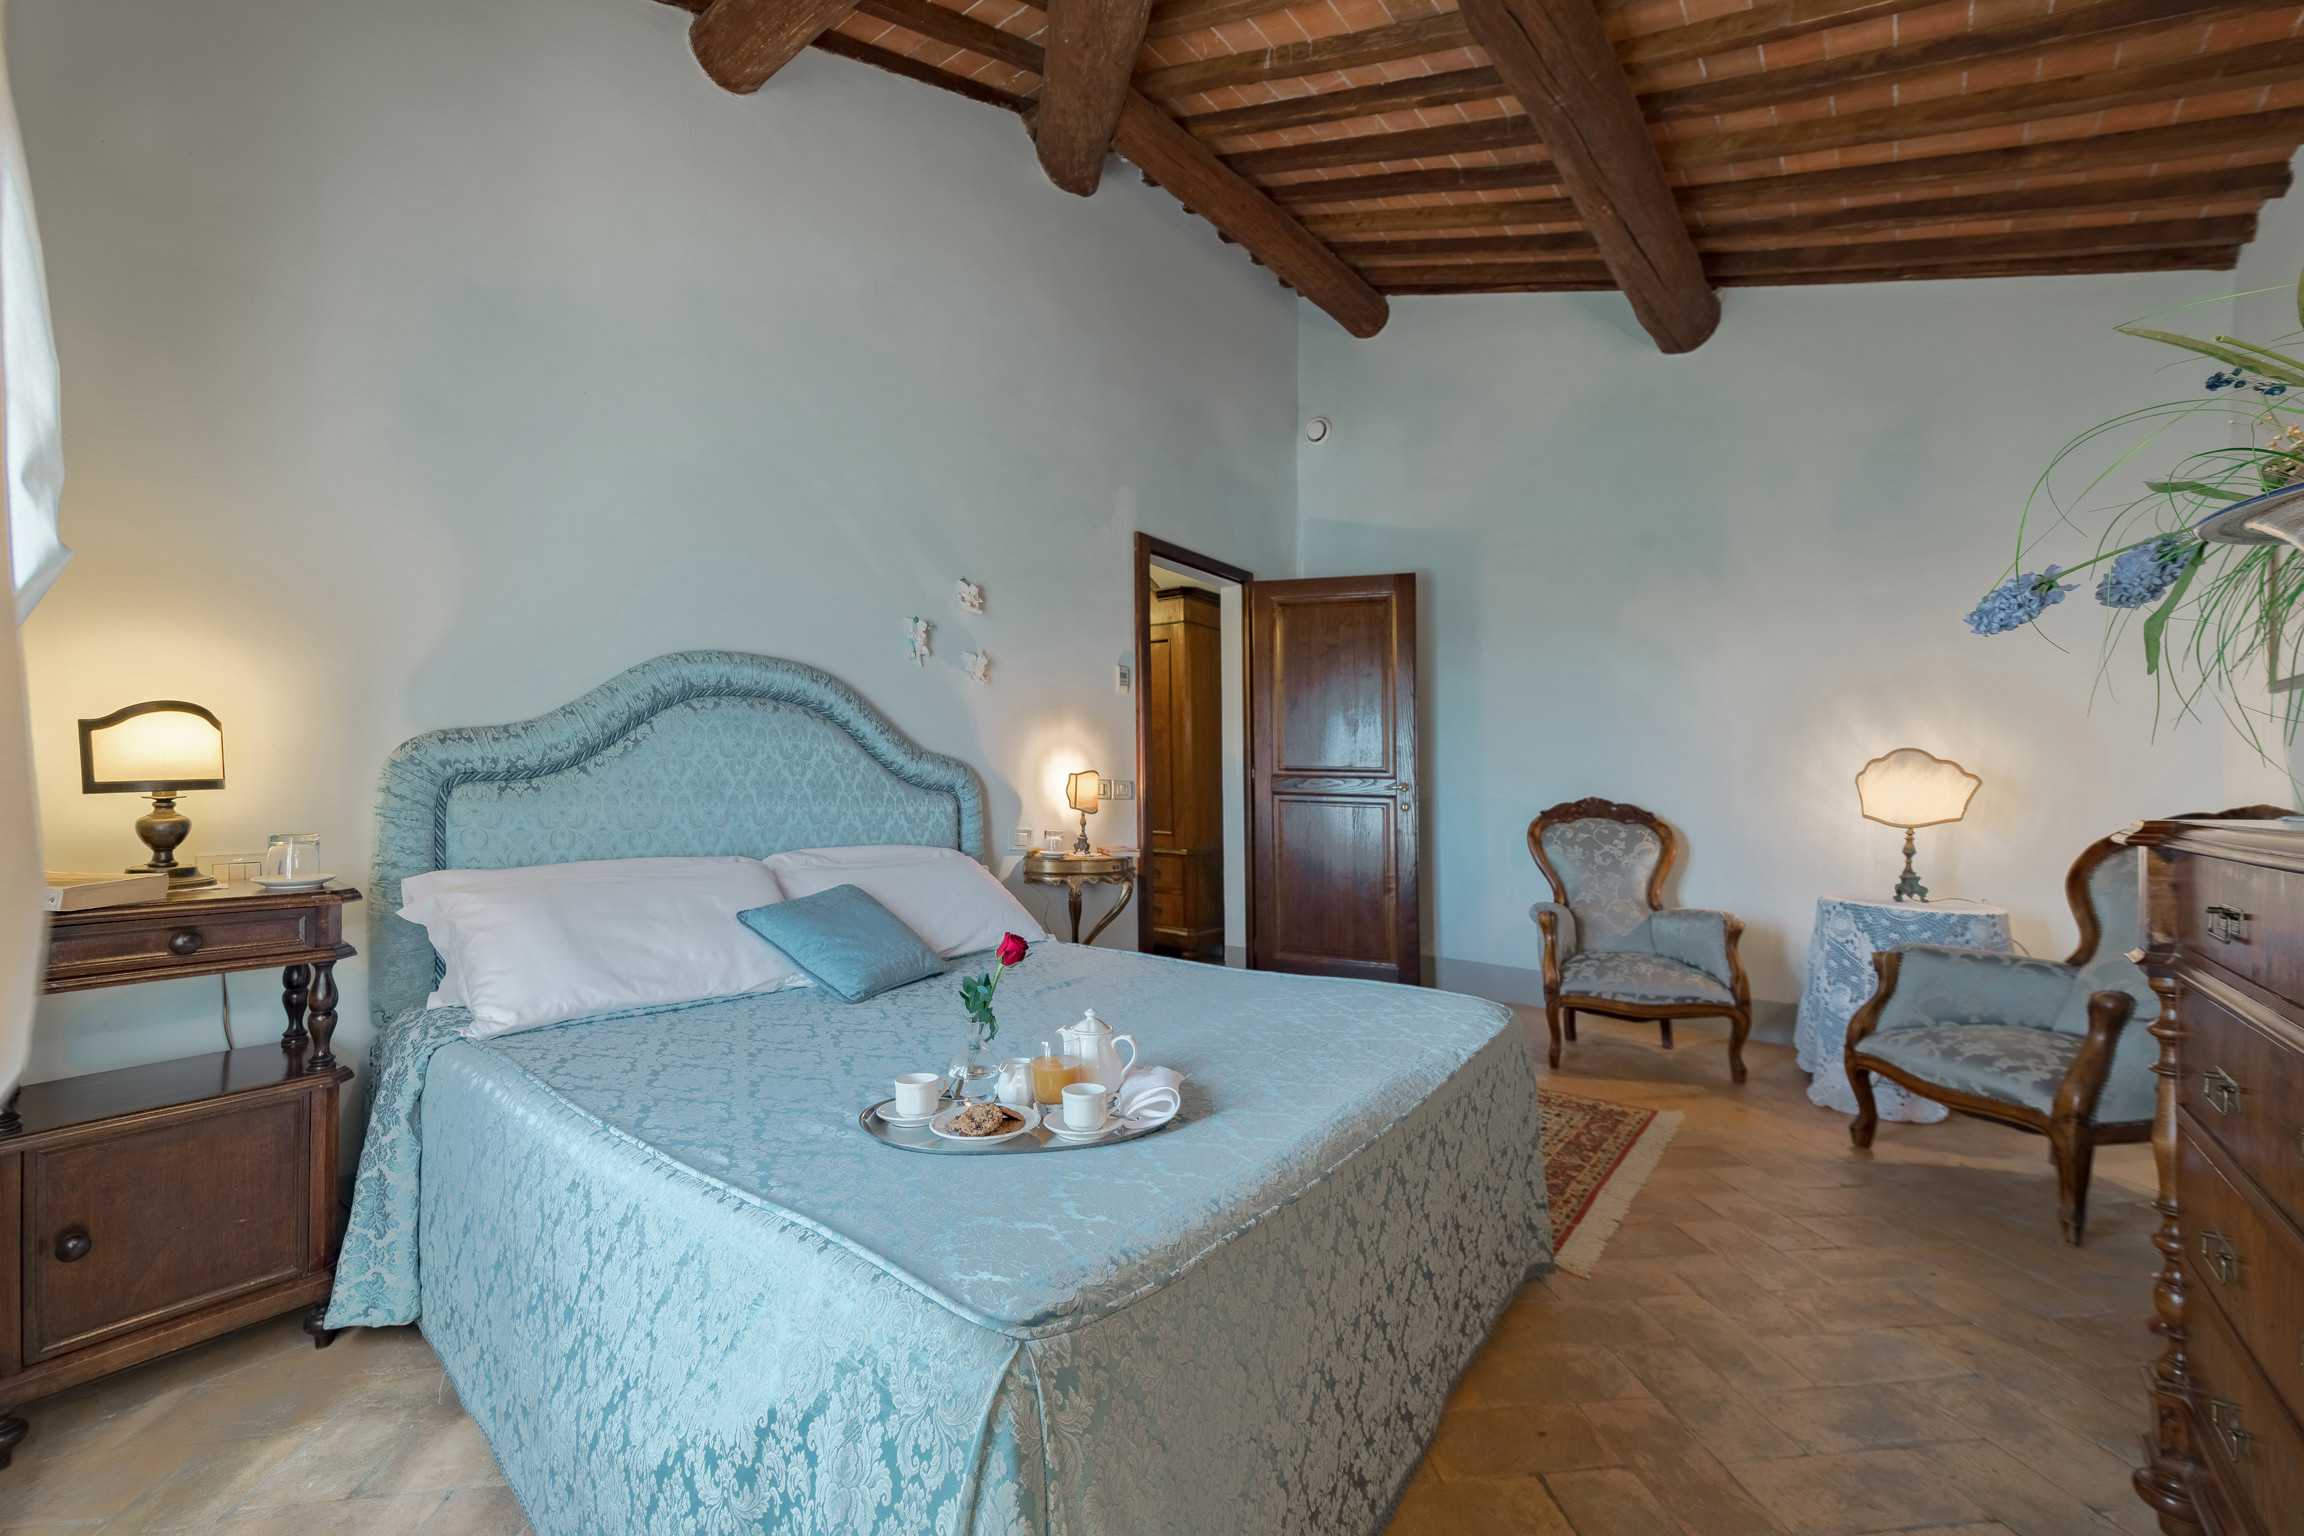 Villa de’ Michelangioli slaapkamer